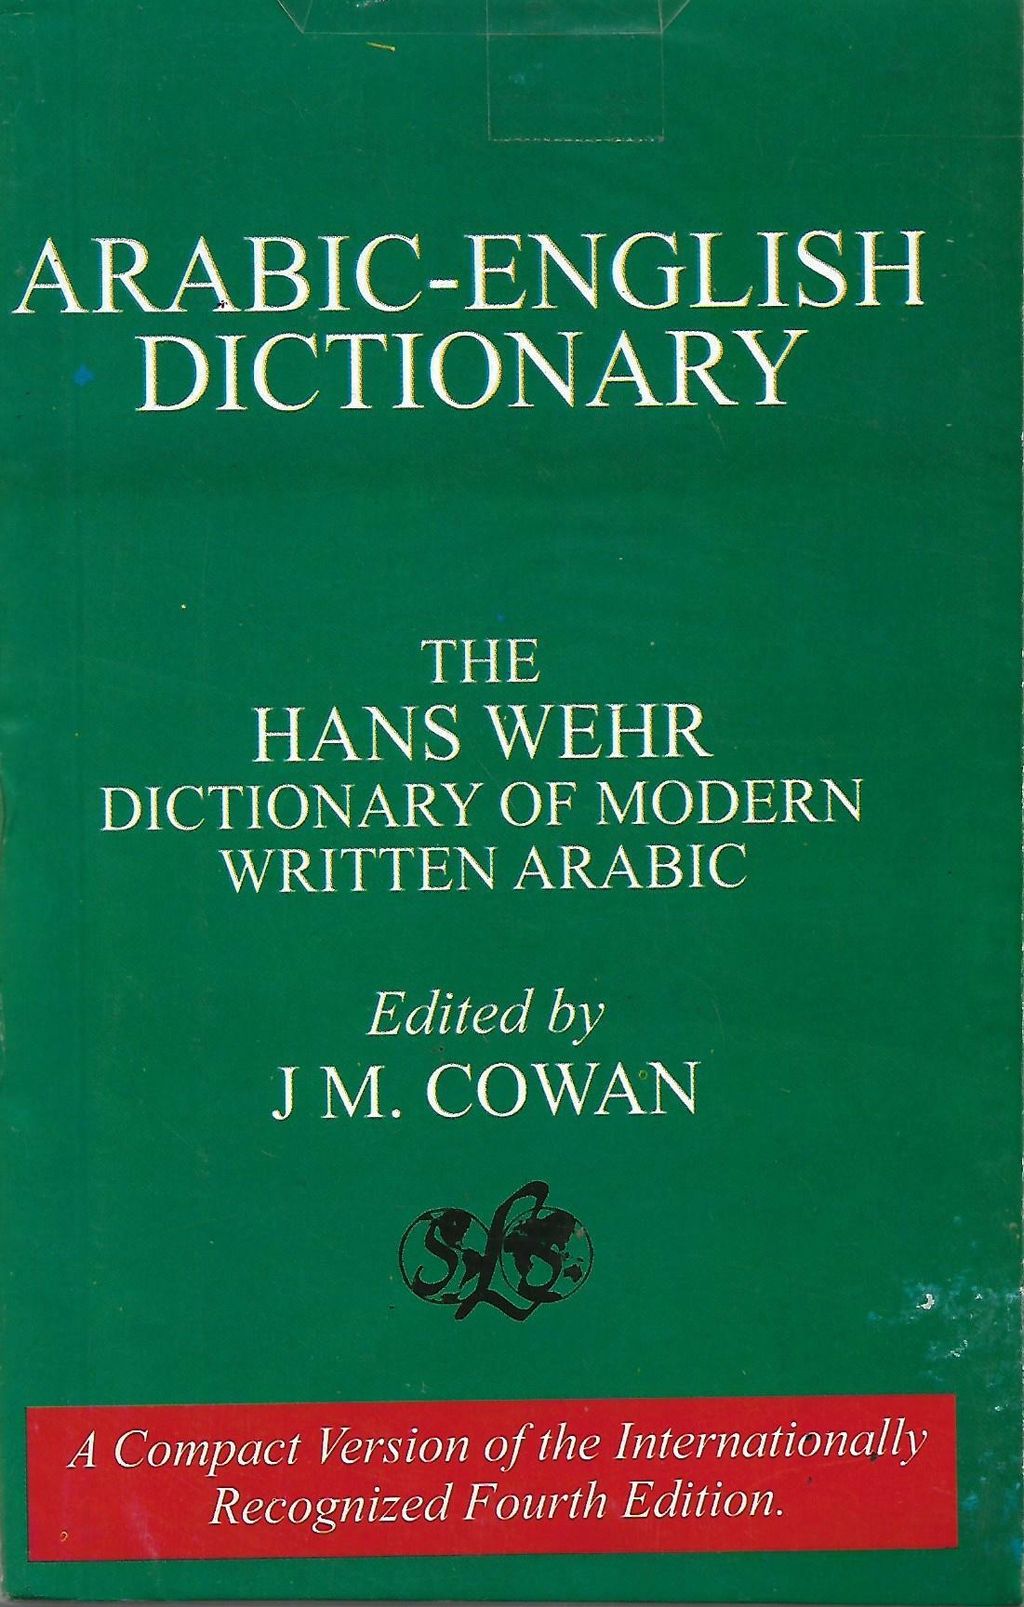 arabic english dictionary (large)_0001.jpg